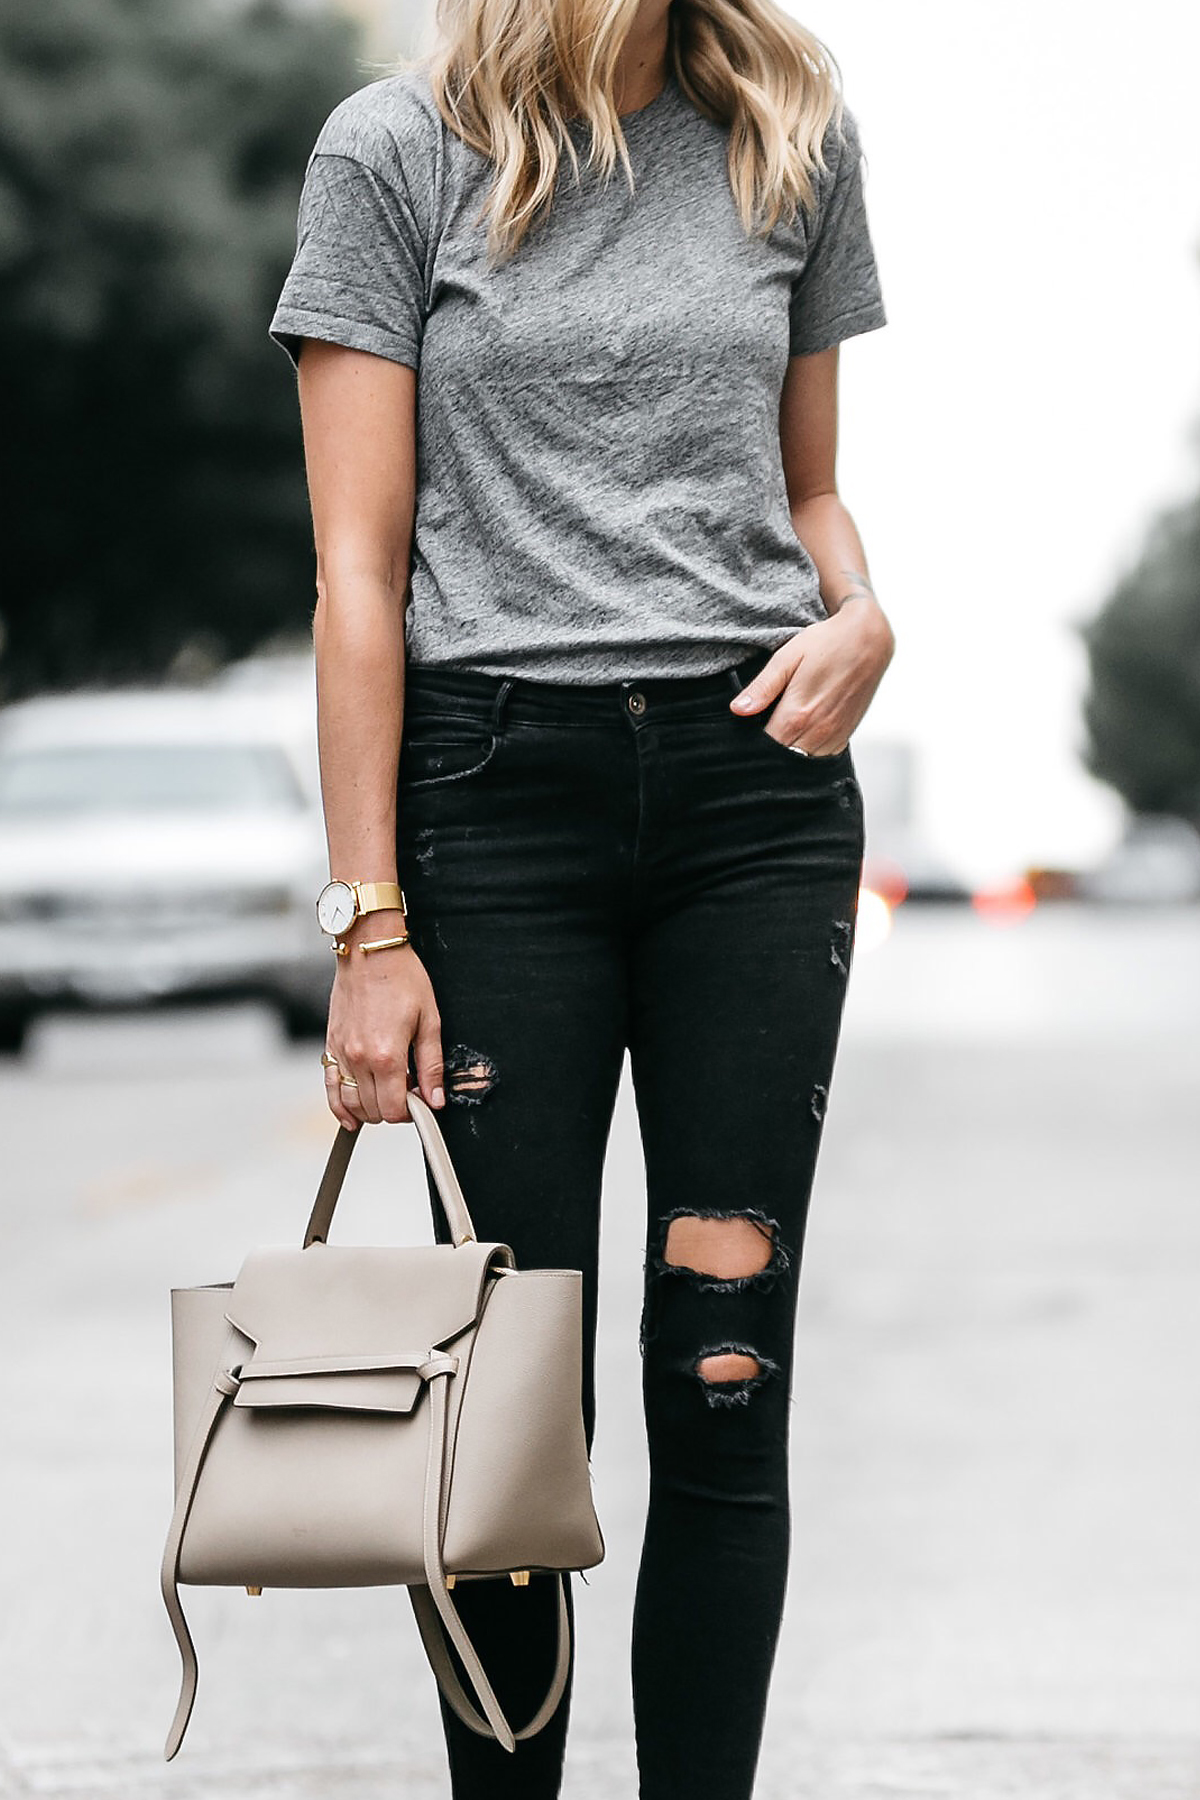 Madewell grey tshirt zara black ripped skinny jeans outfit celine belt bag street style dallas blogger fashion blogger